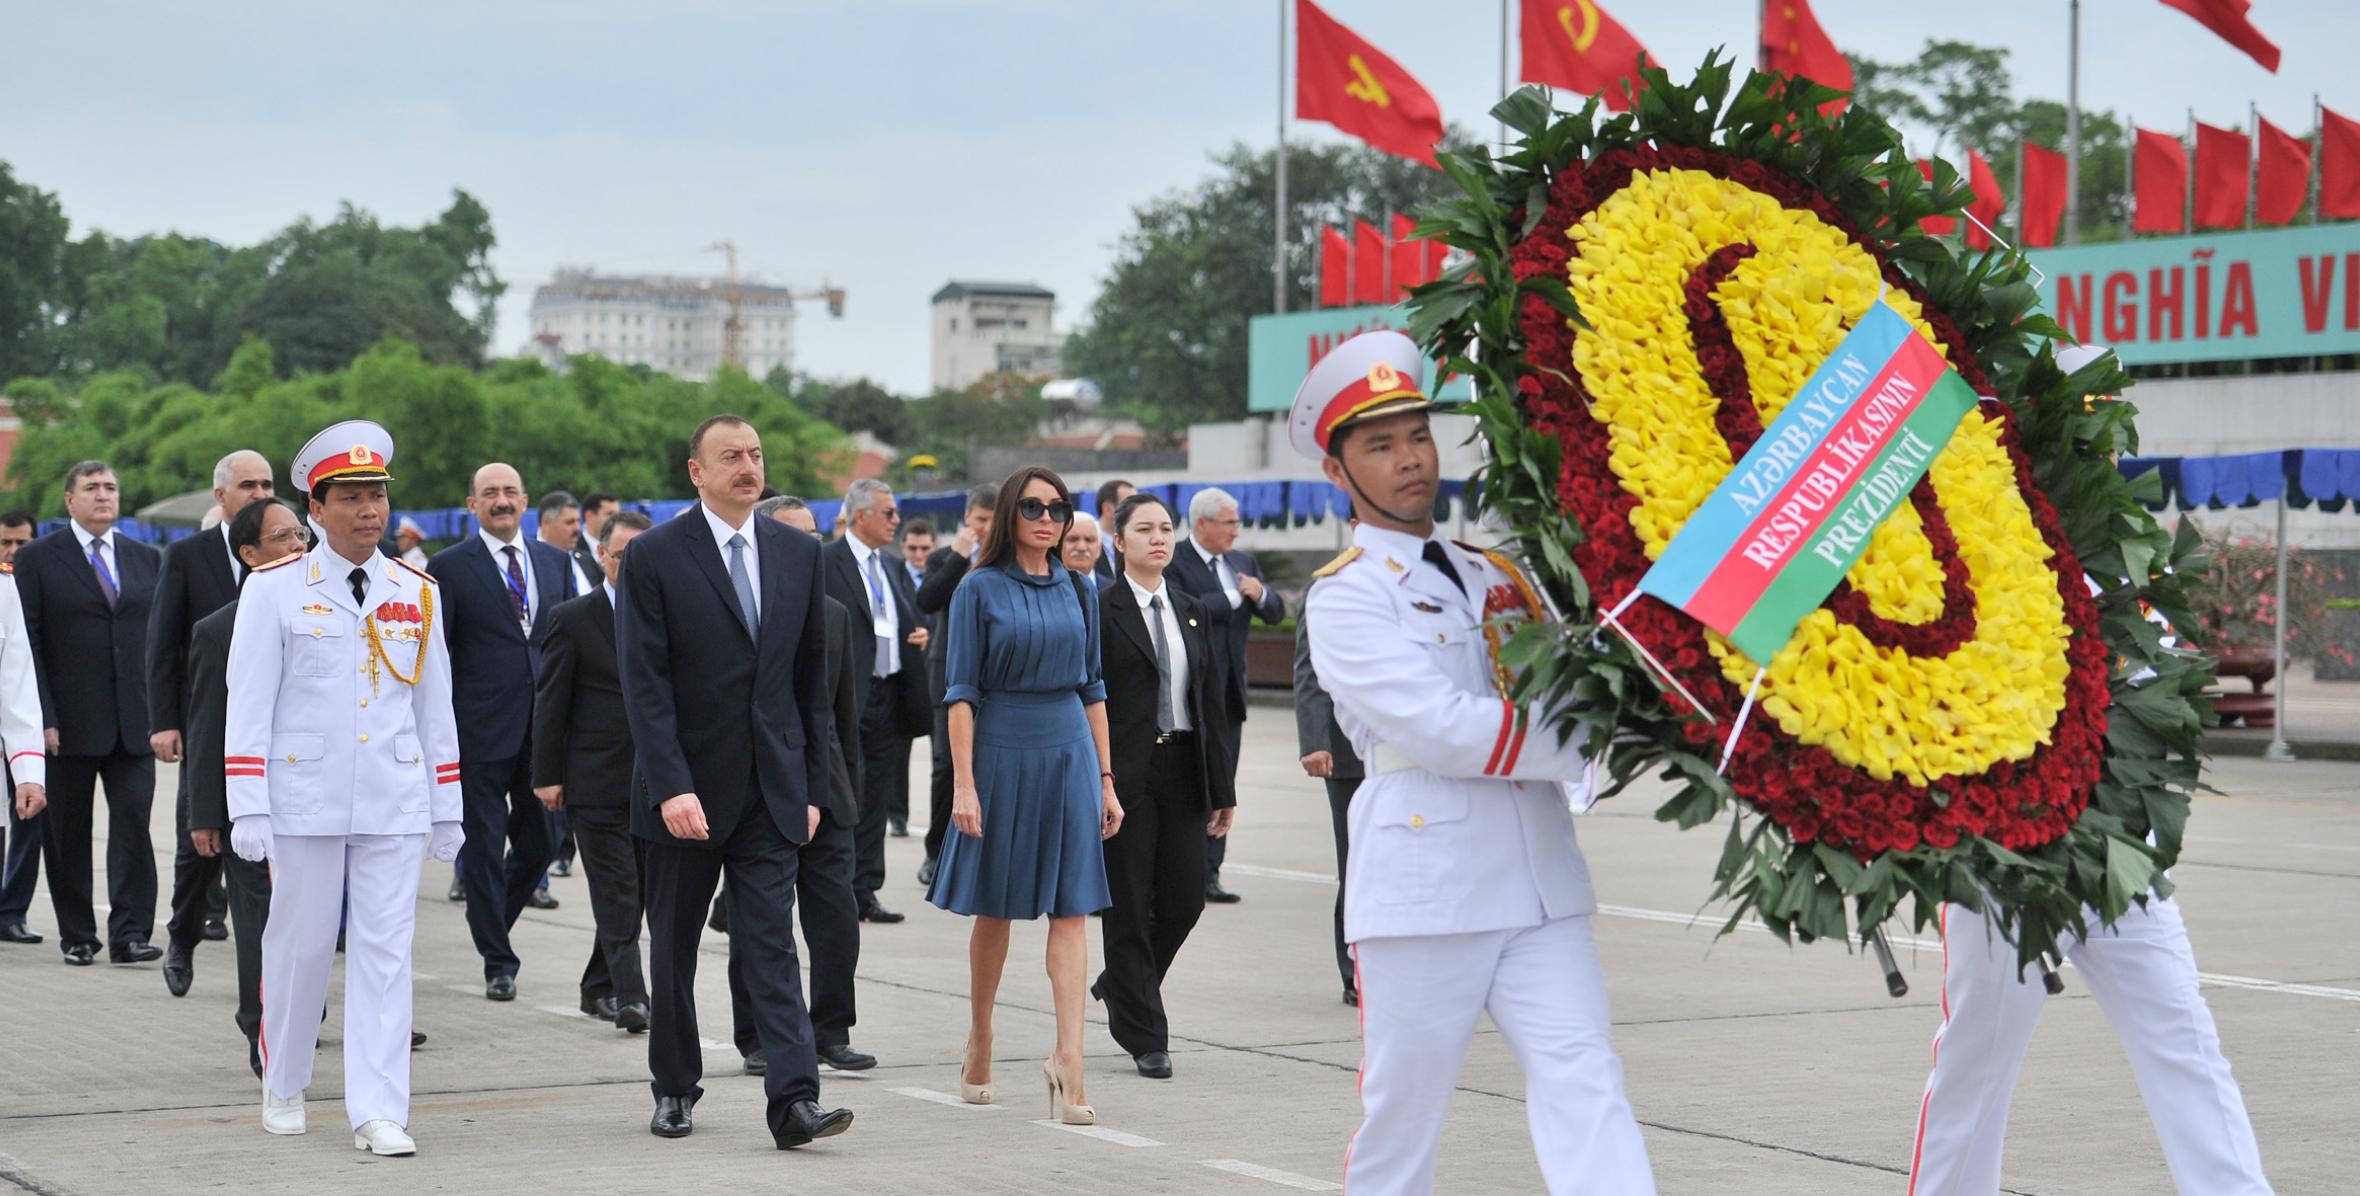 Ilham Aliyev visited the Ho Chi Minh mausoleum in Vietnam